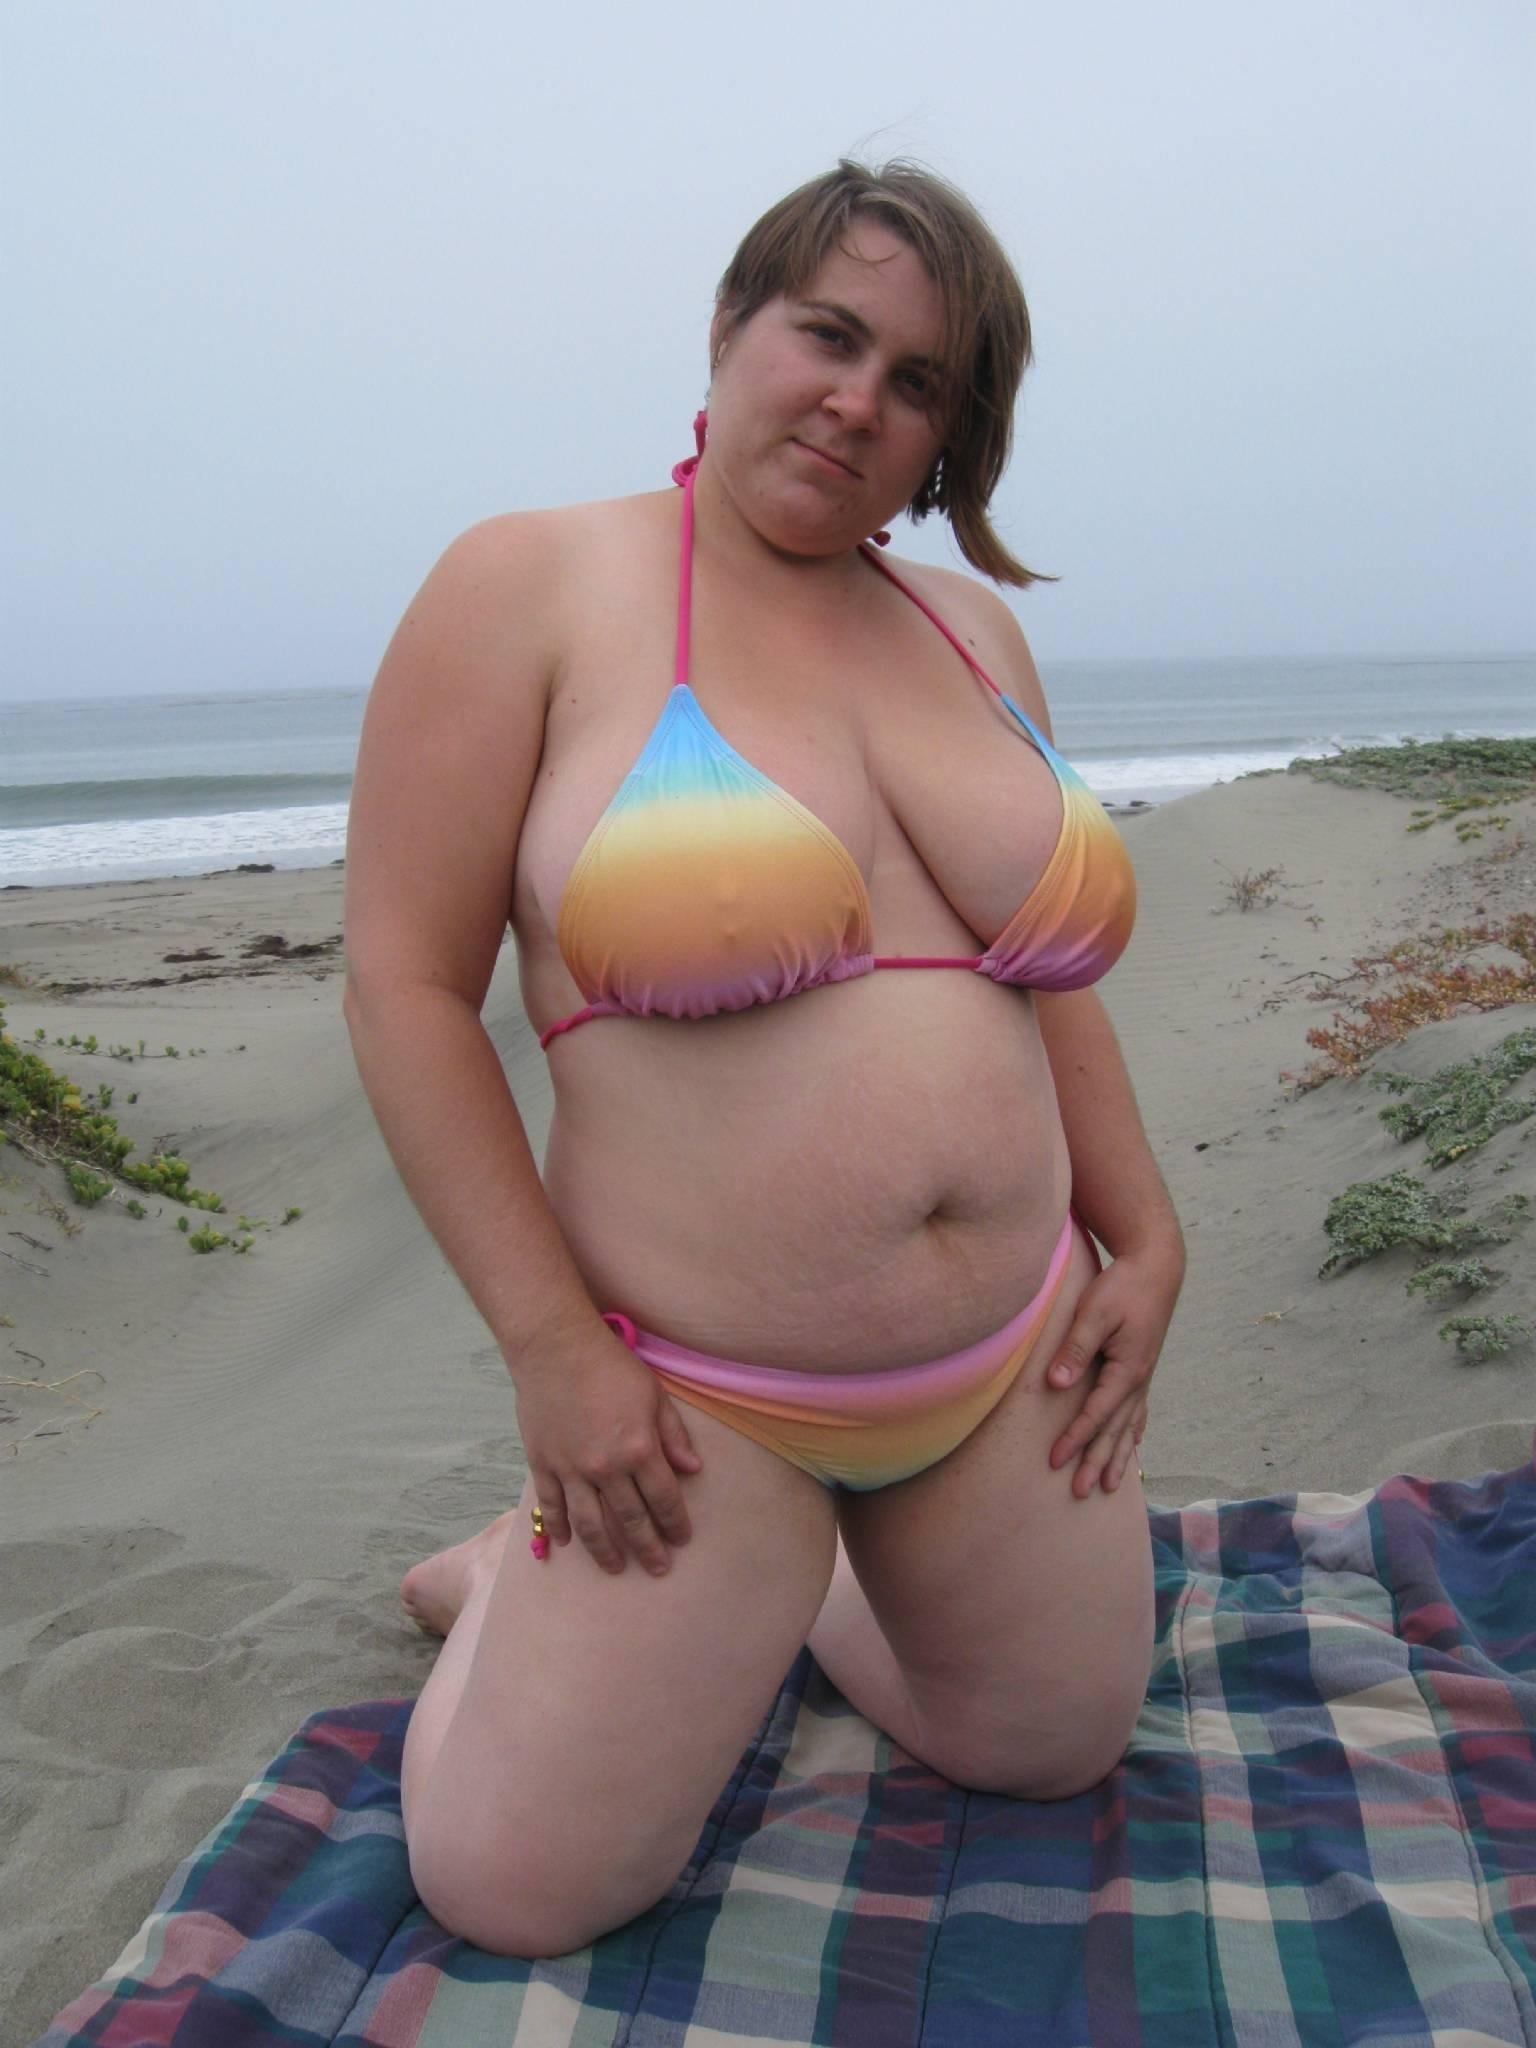 oscars california girl bikini contest